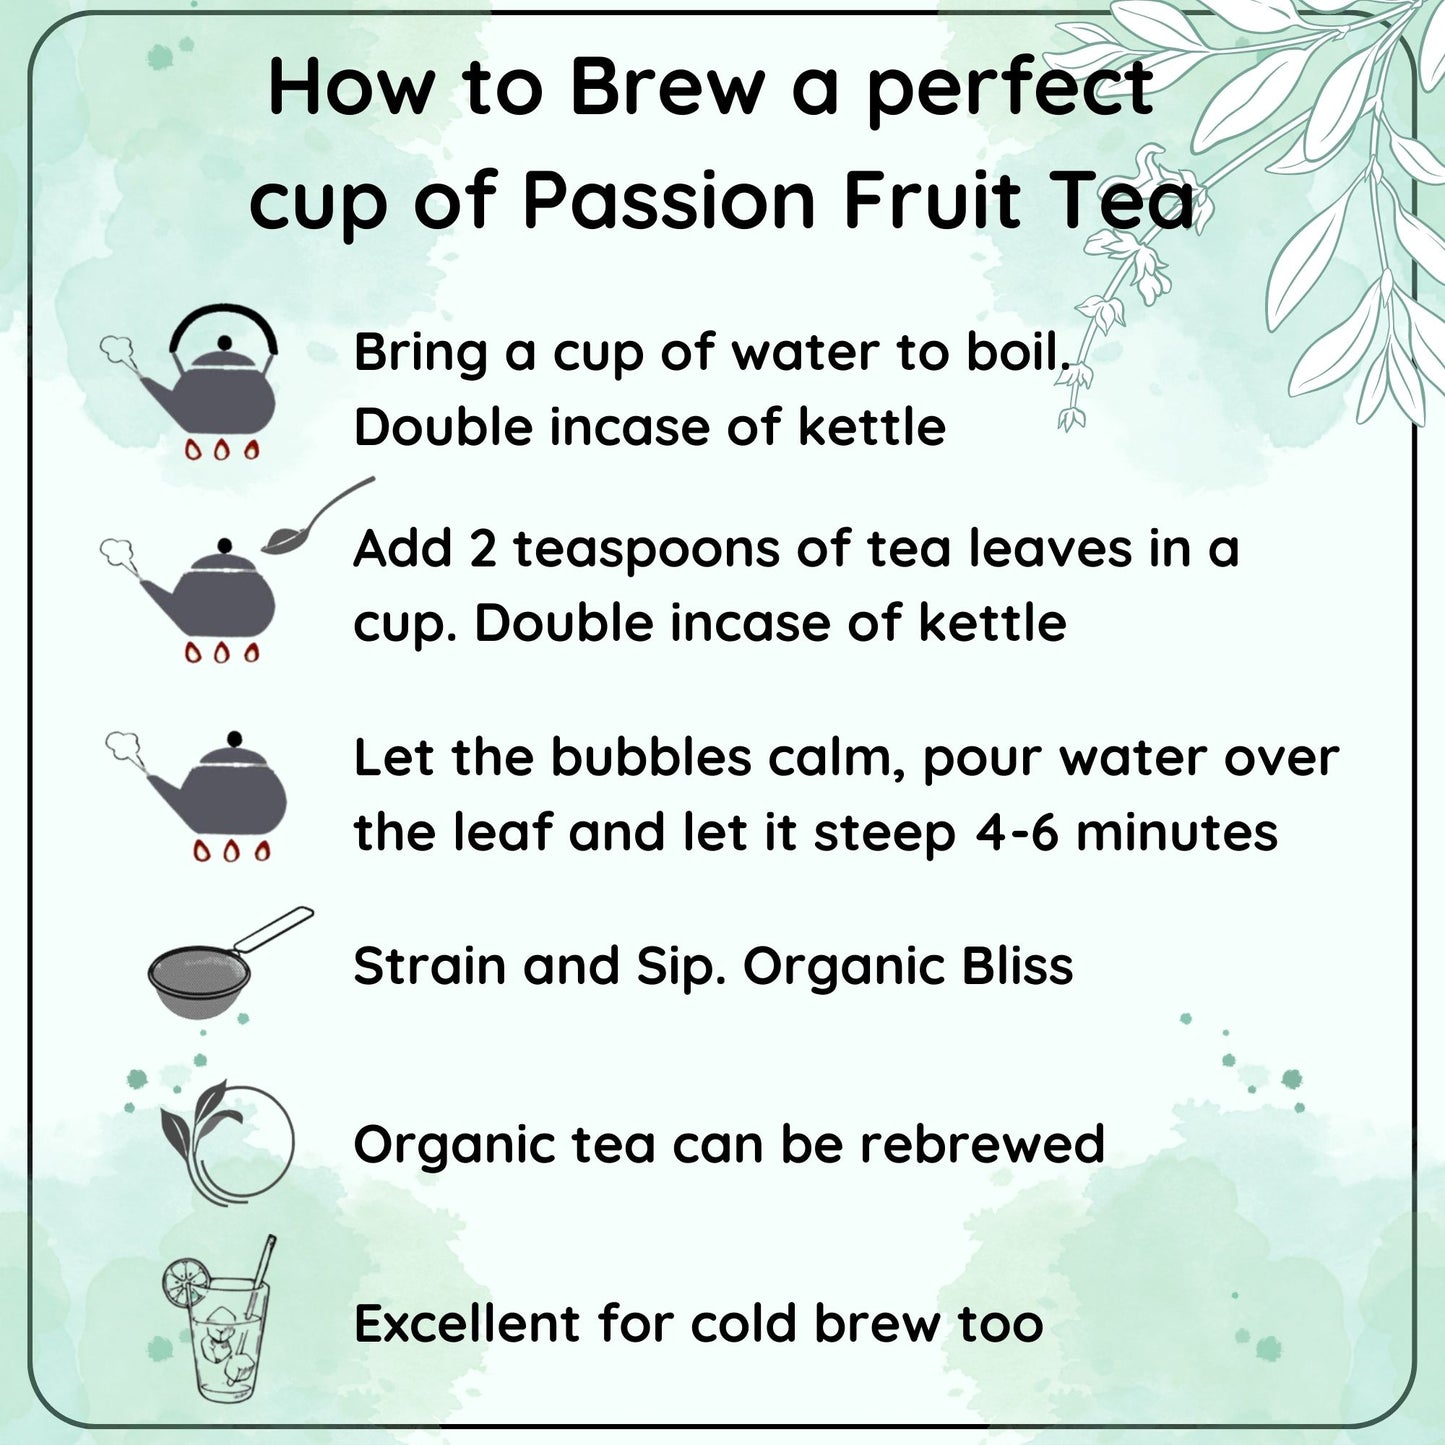 DESTRESS Passion Fruit Darjeeling Leaf - The Benefits of Drinking Destress Passion Fruit Tea for Antioxidants and Mental Stimulation - Radhikas Fine Teas and Whatnots